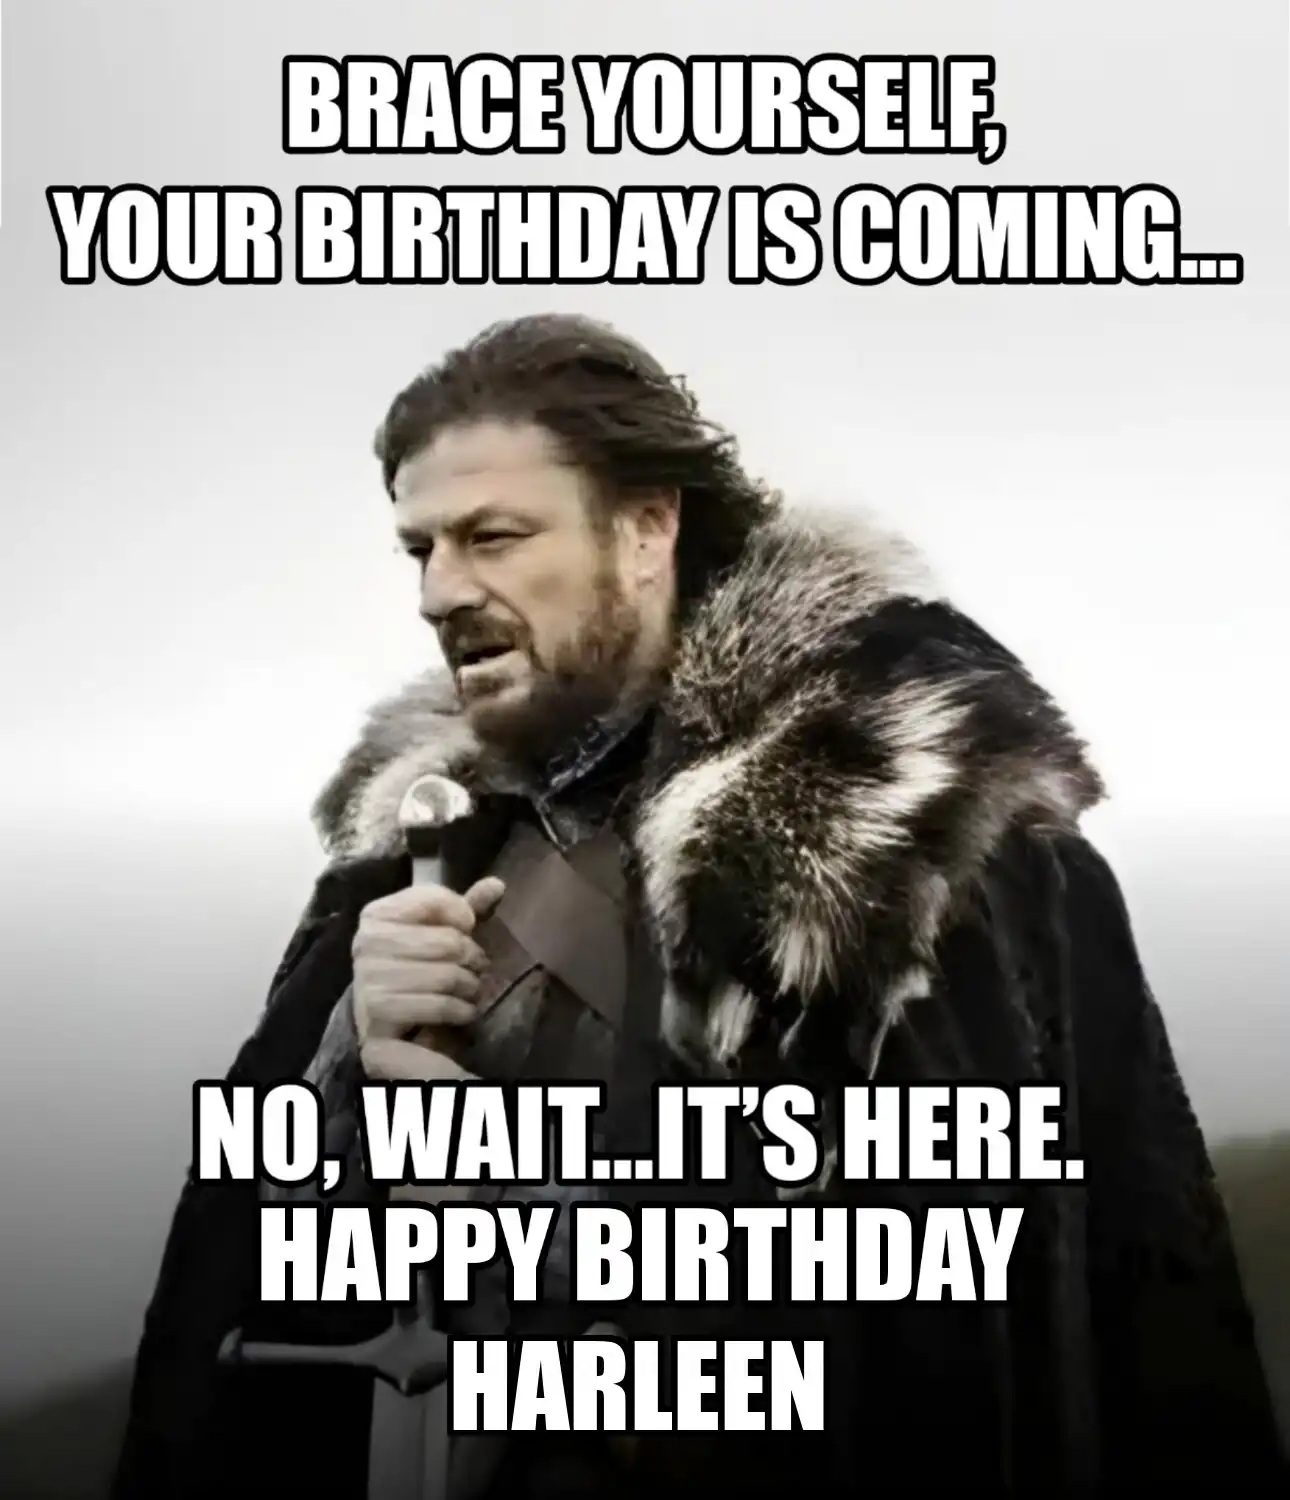 Happy Birthday Harleen Brace Yourself Your Birthday Is Coming Meme